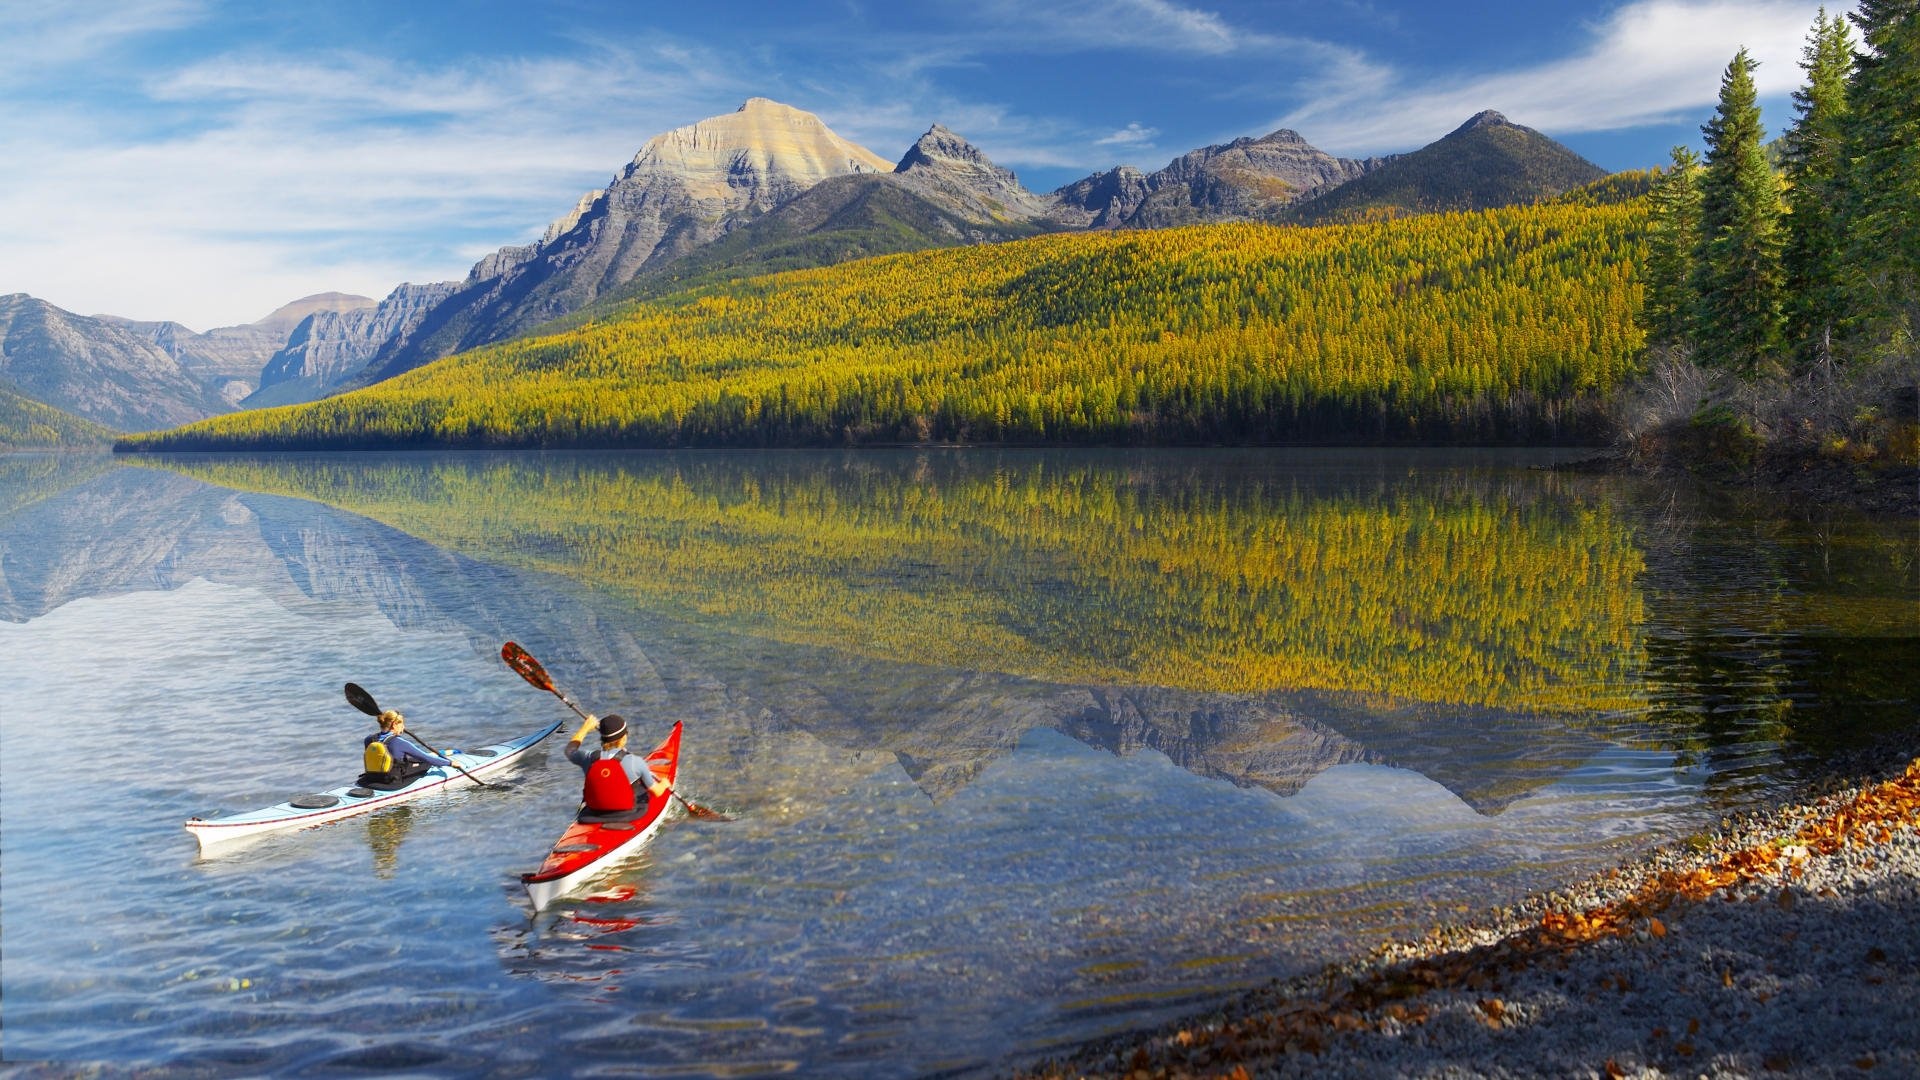 Kayaking: Canoe camping, Recreational boating at the lake, Small watercraft travel. 1920x1080 Full HD Wallpaper.